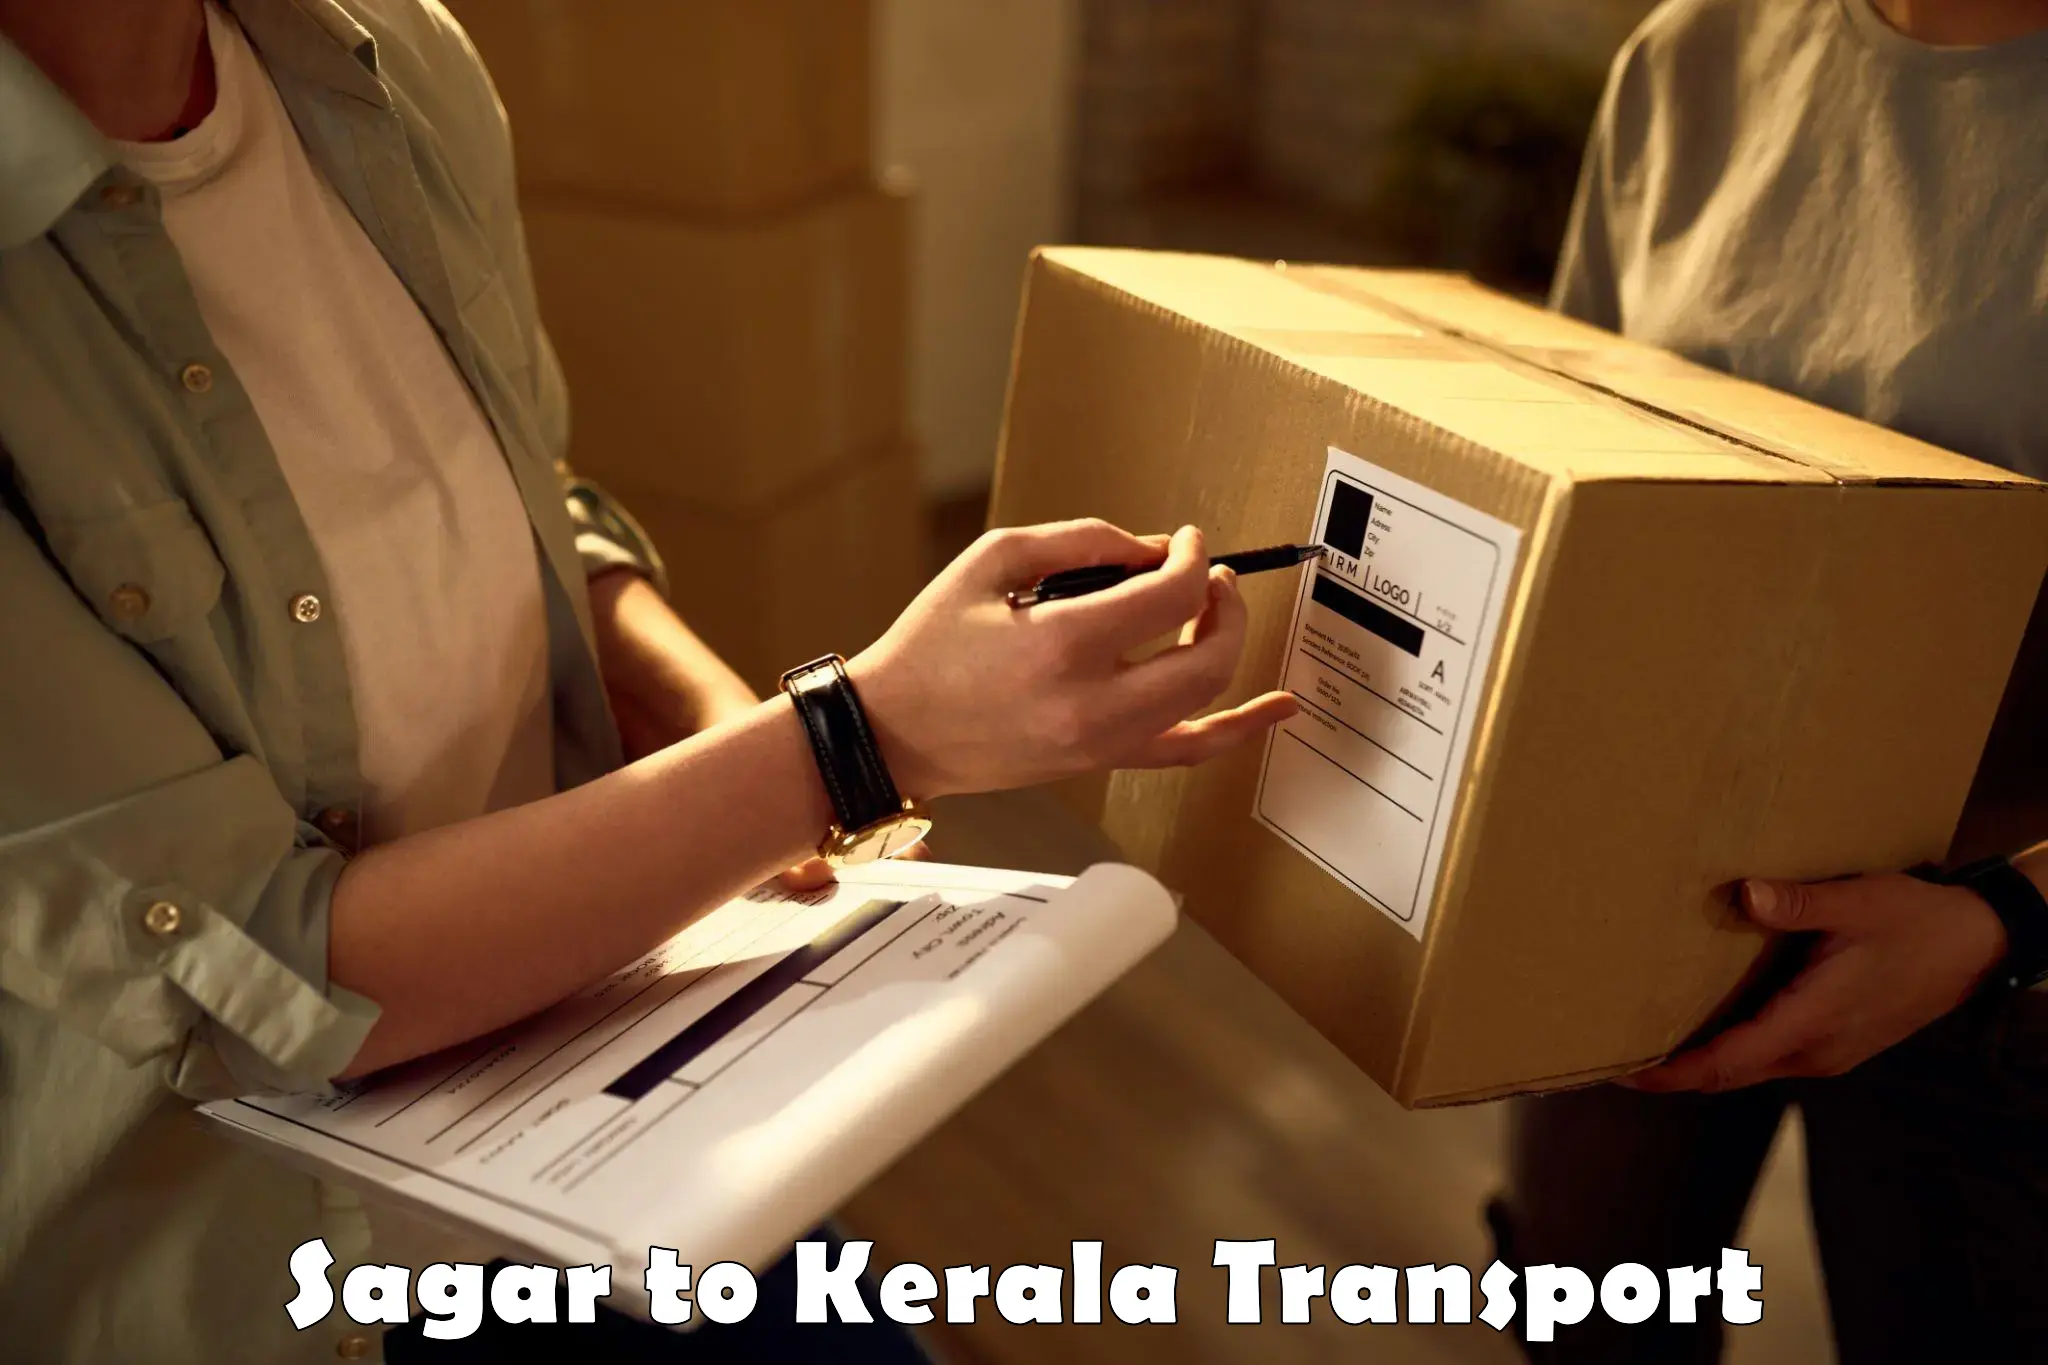 Online transport service Sagar to Cochin Port Kochi